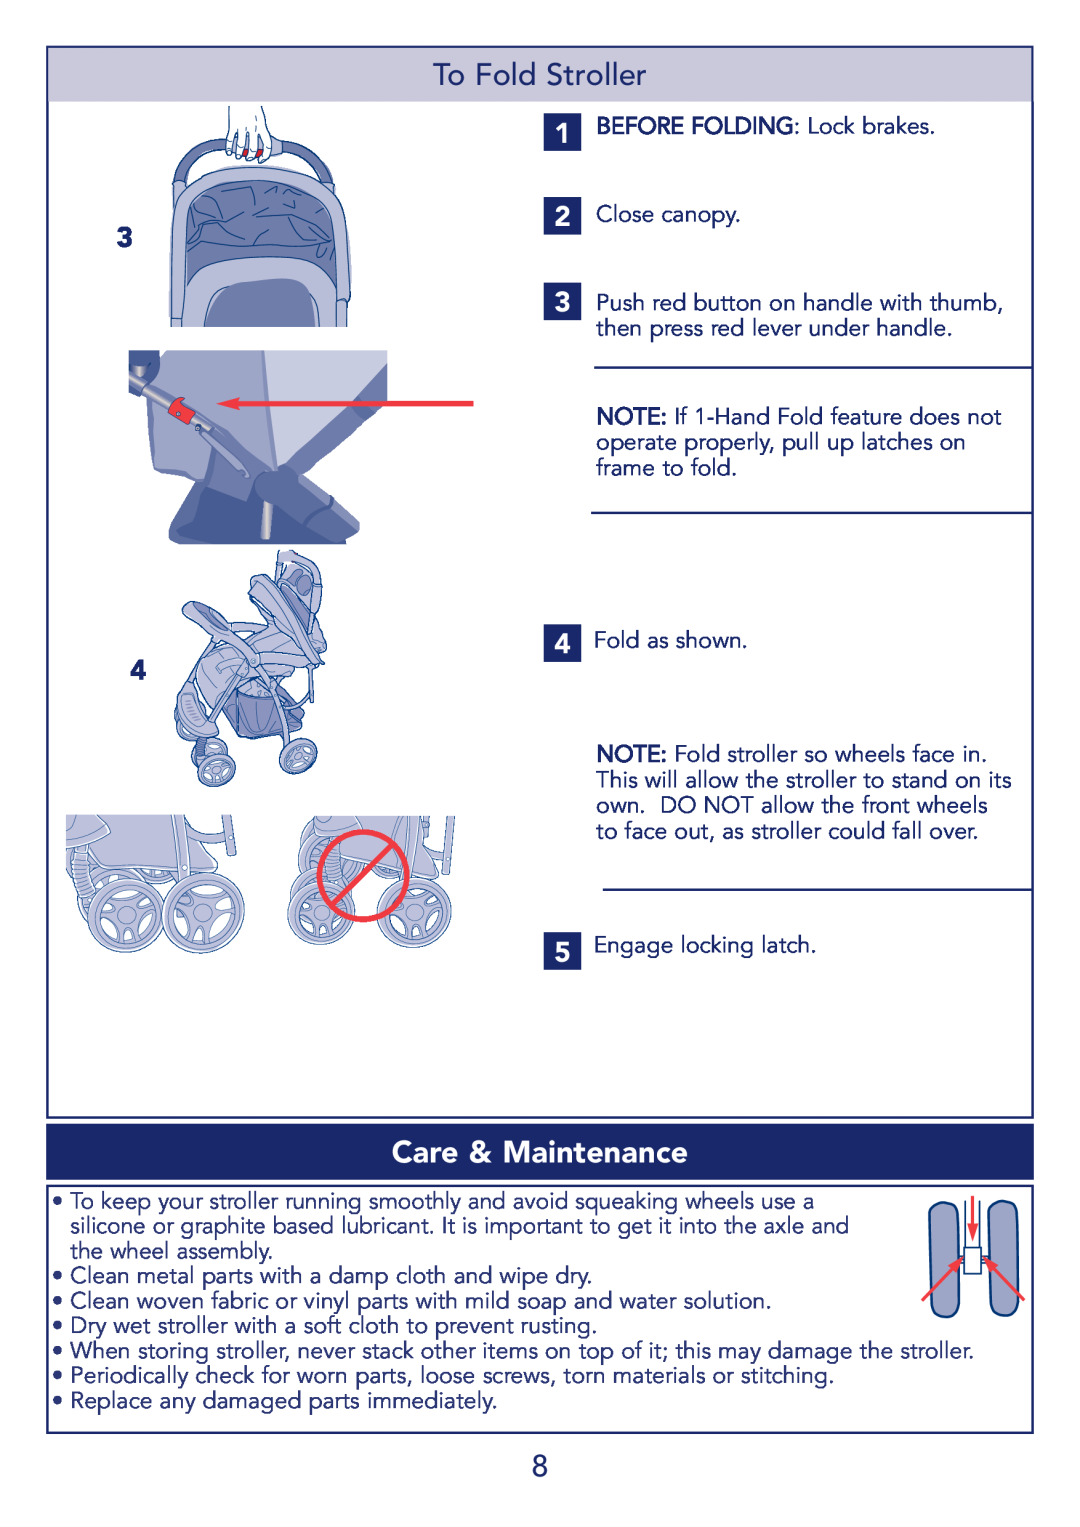 Kolcraft S51-T 11/08 manual Care & Maintenance, To Fold Stroller, BEFORE FOLDING Lock brakes 